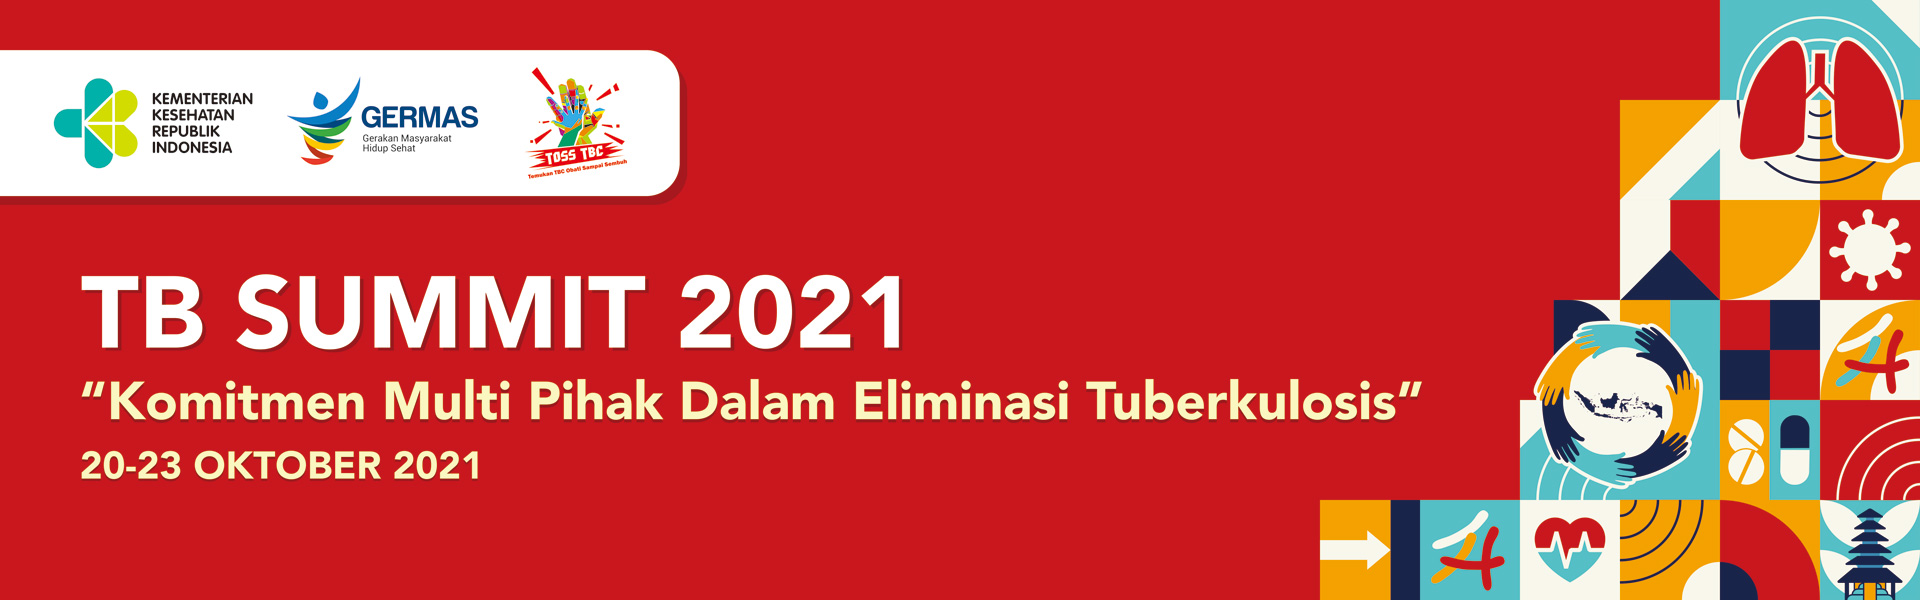 Pertemuan TB Summit 2021